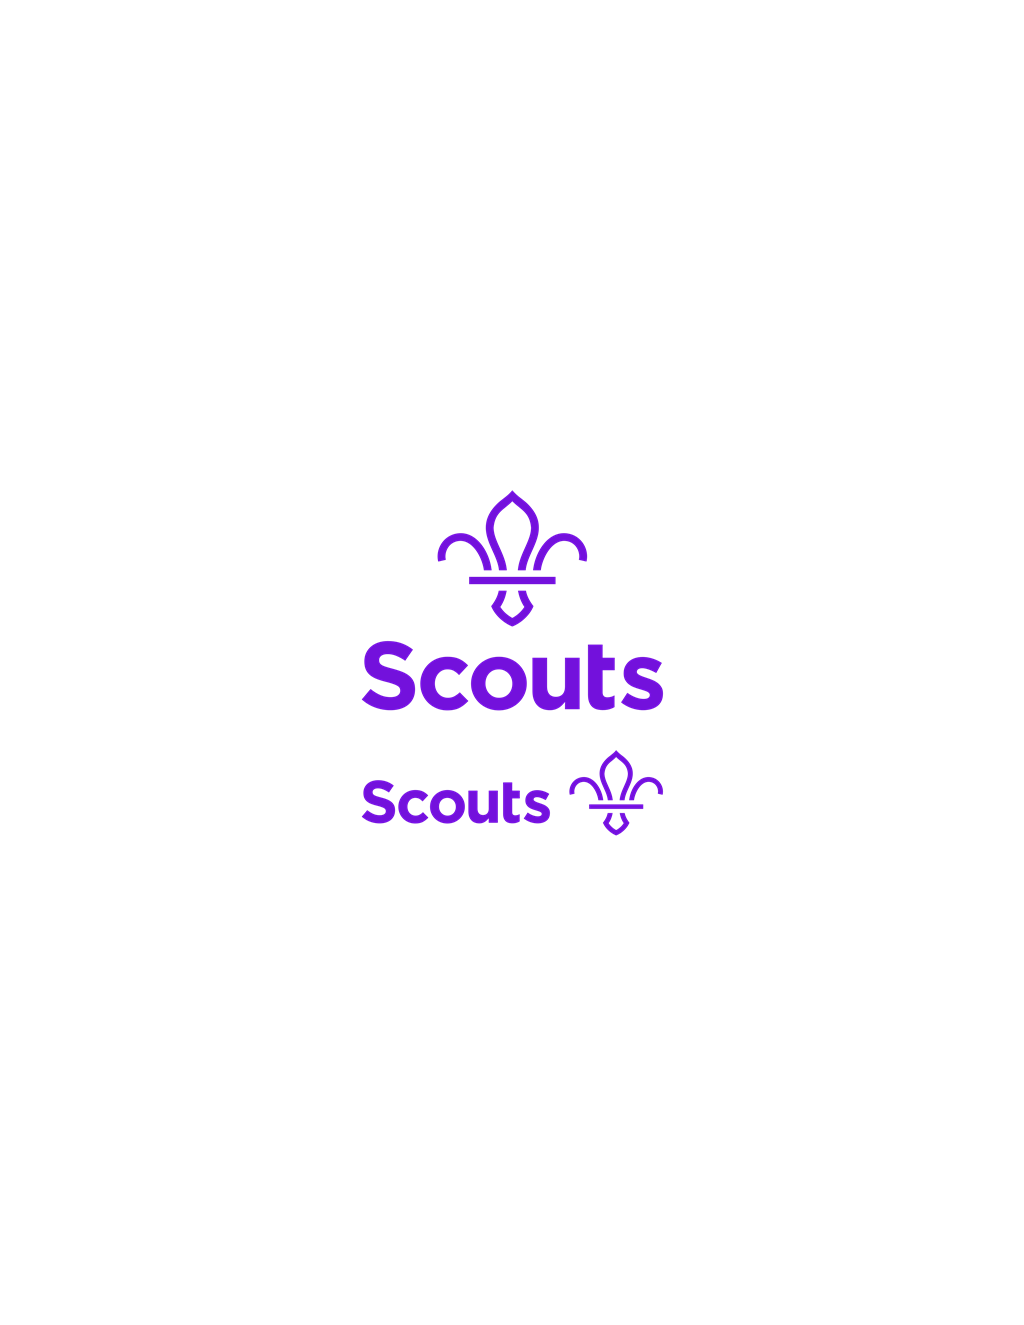 Scouts logotype, transparent .png, medium, large